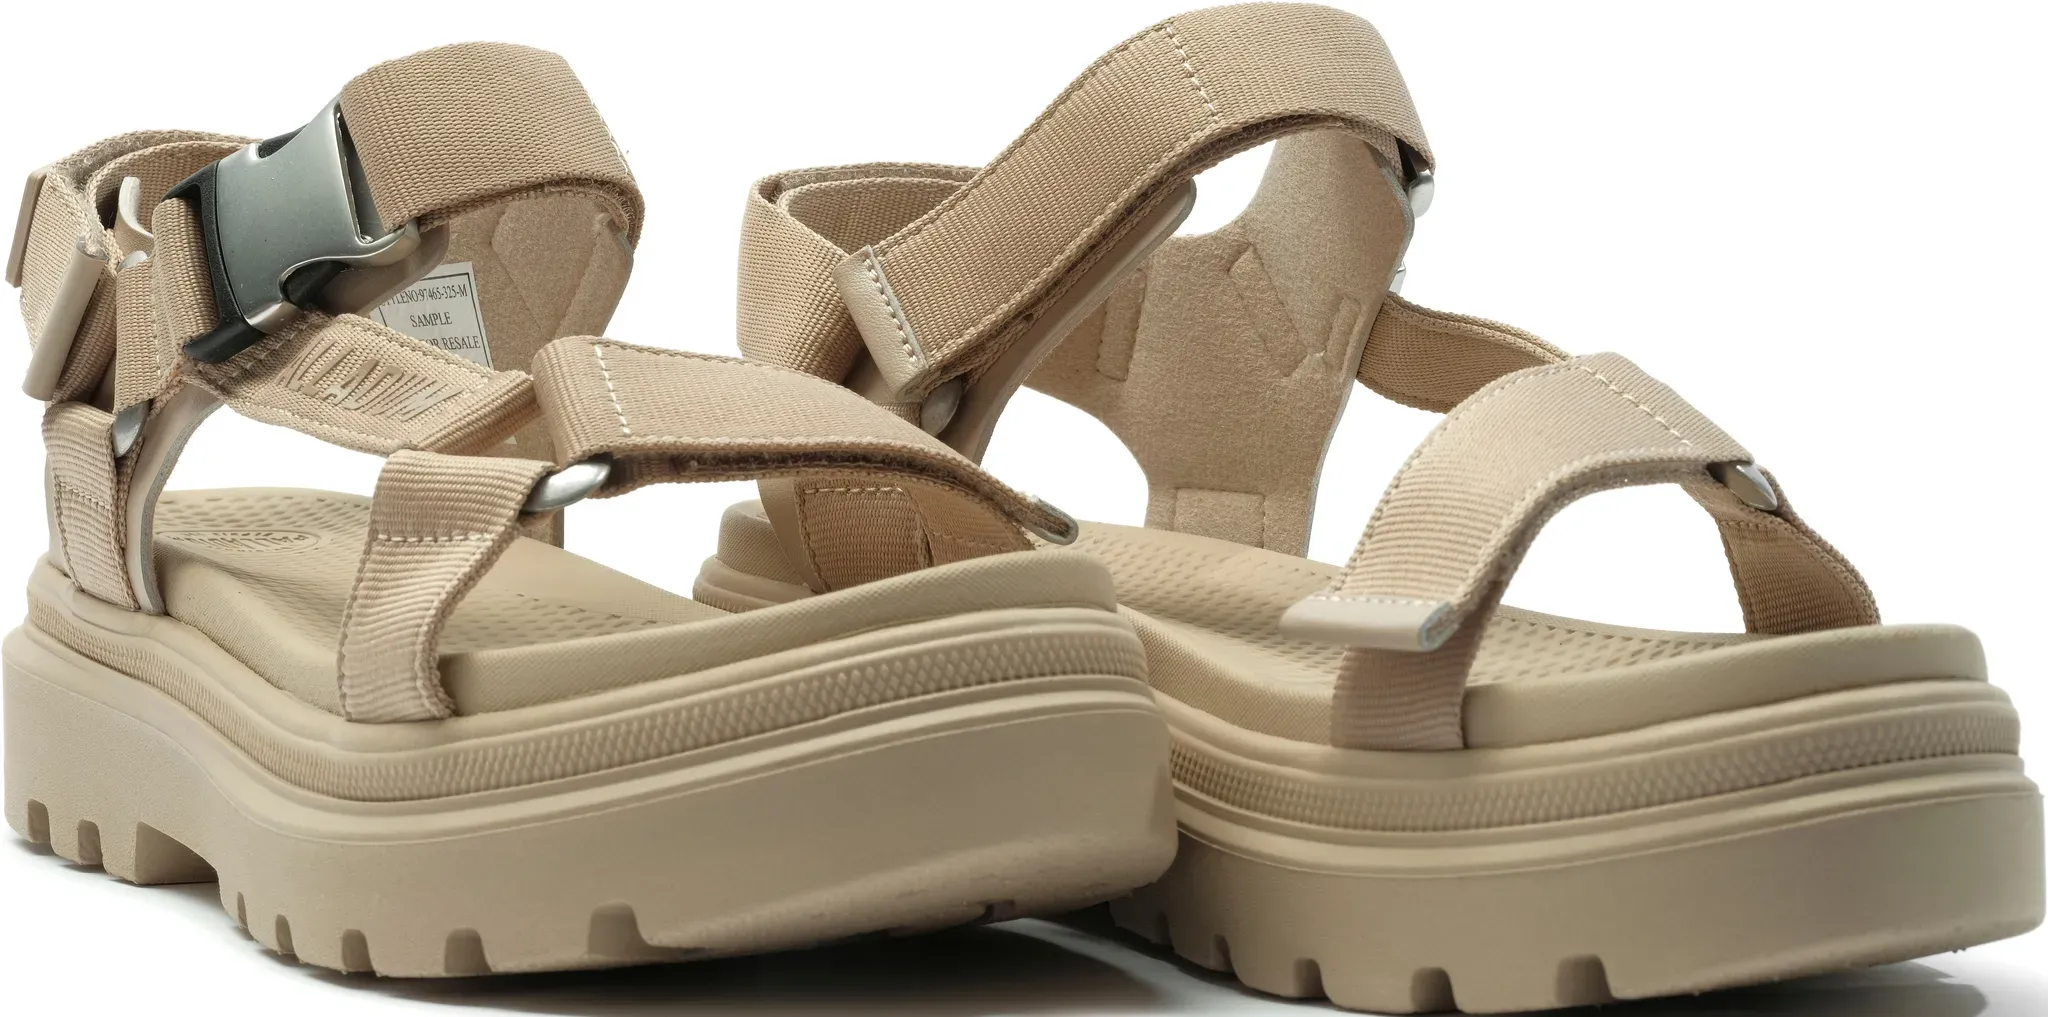 Sandale PALLADIUM "PALLACRUISE STRAP" Gr. 38, beige Schuhe Sandalen